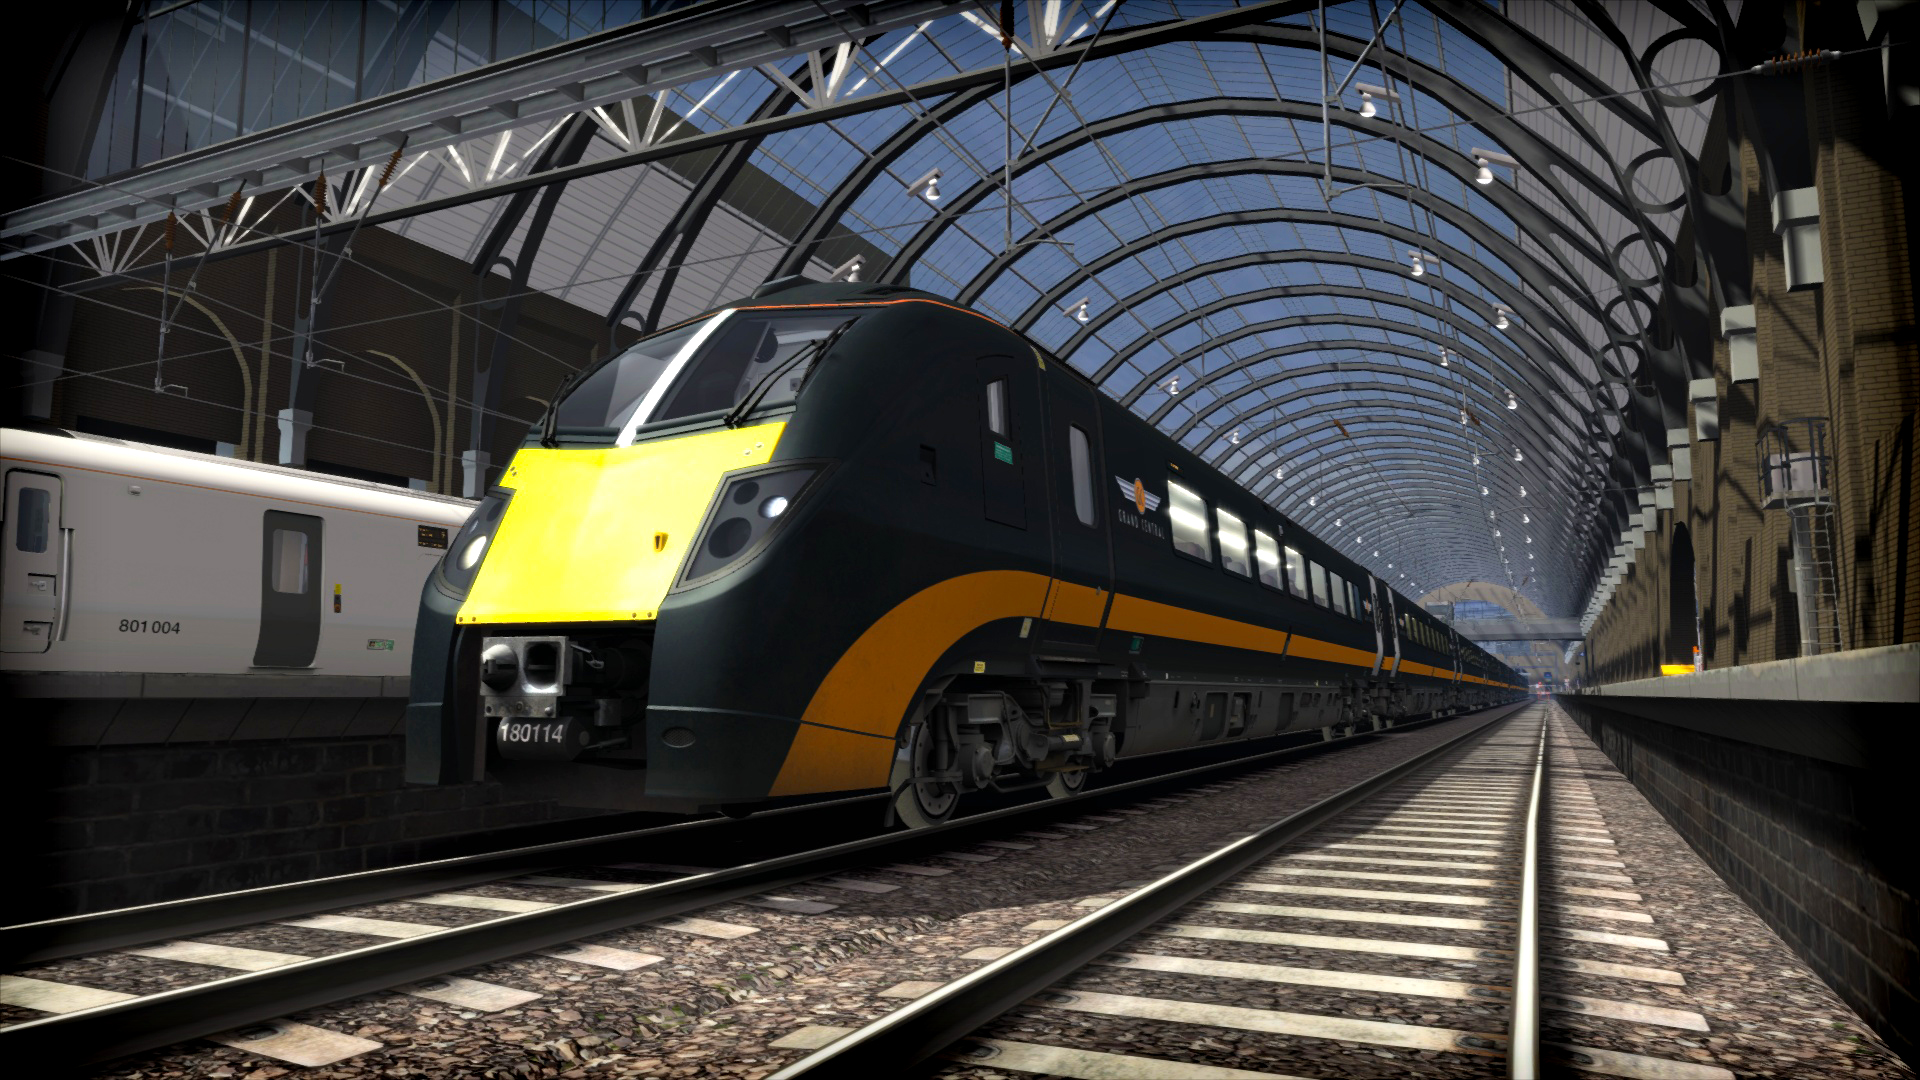 [$ 0.44] Train Simulator Classic - Grand Central Class 180 'Adelante' DMU Add-On DLC Steam CD Key